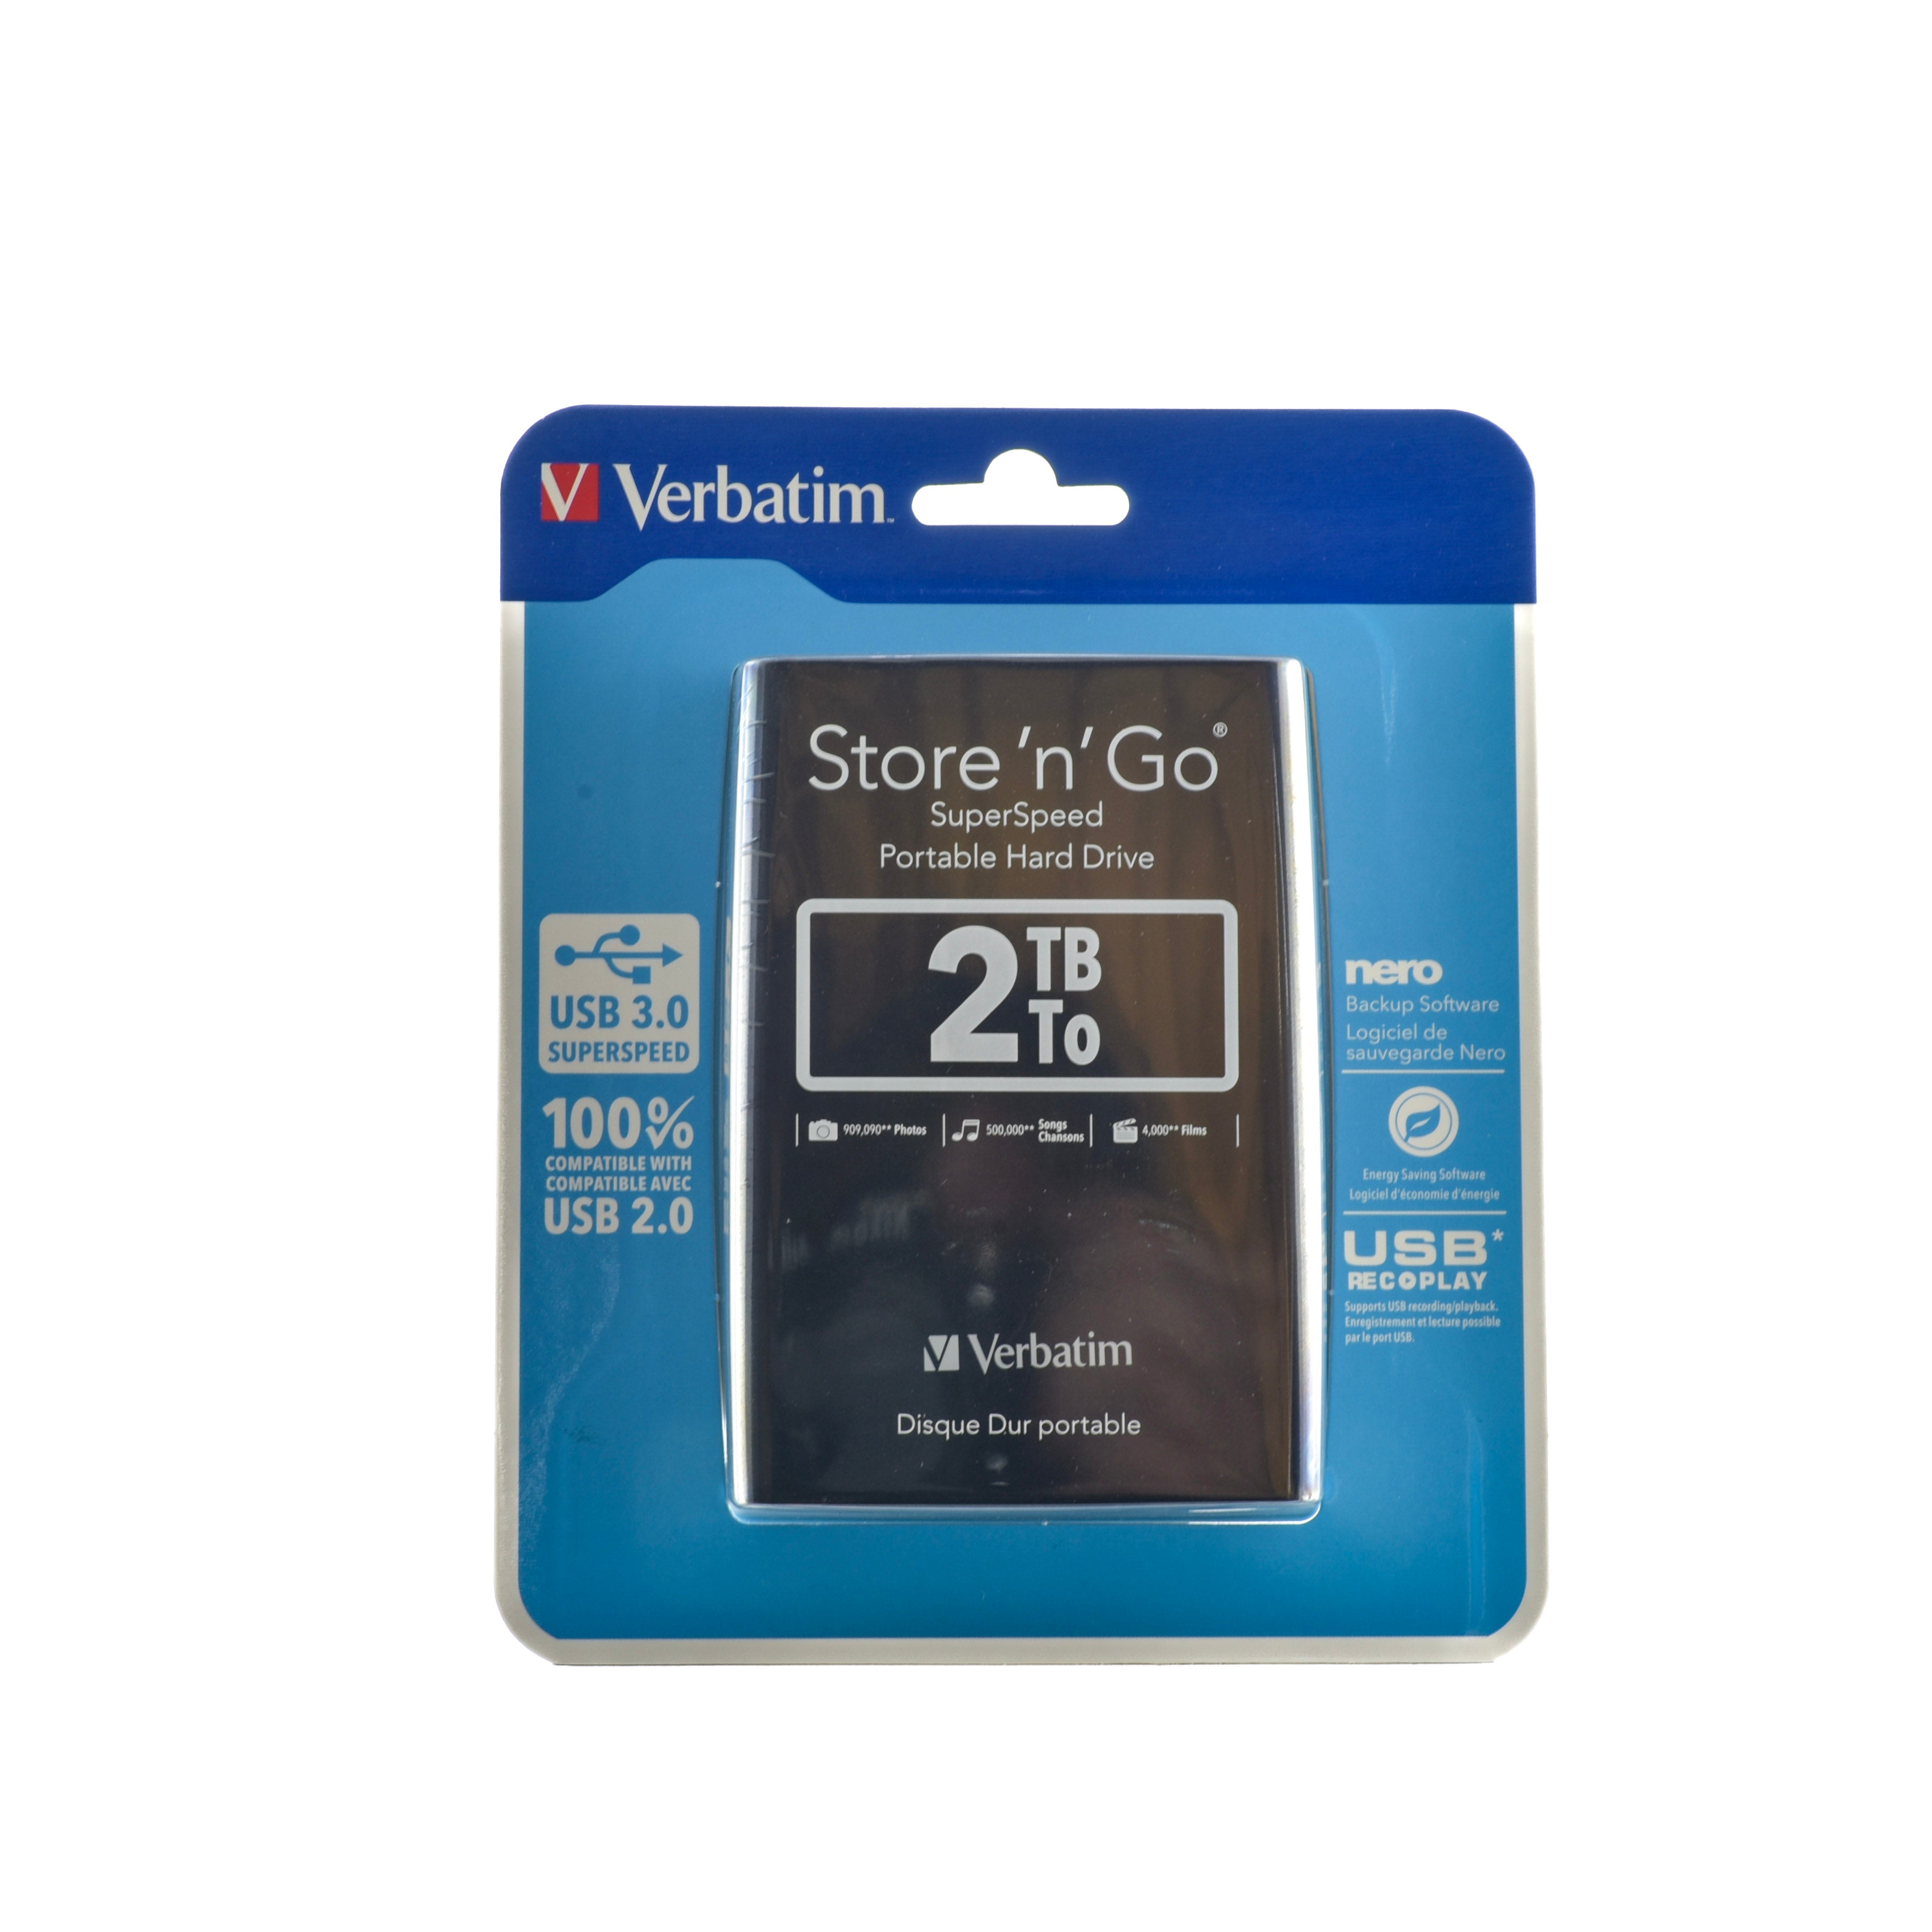 Verbatim Store ‘n’ Go Hard Drive 2TB